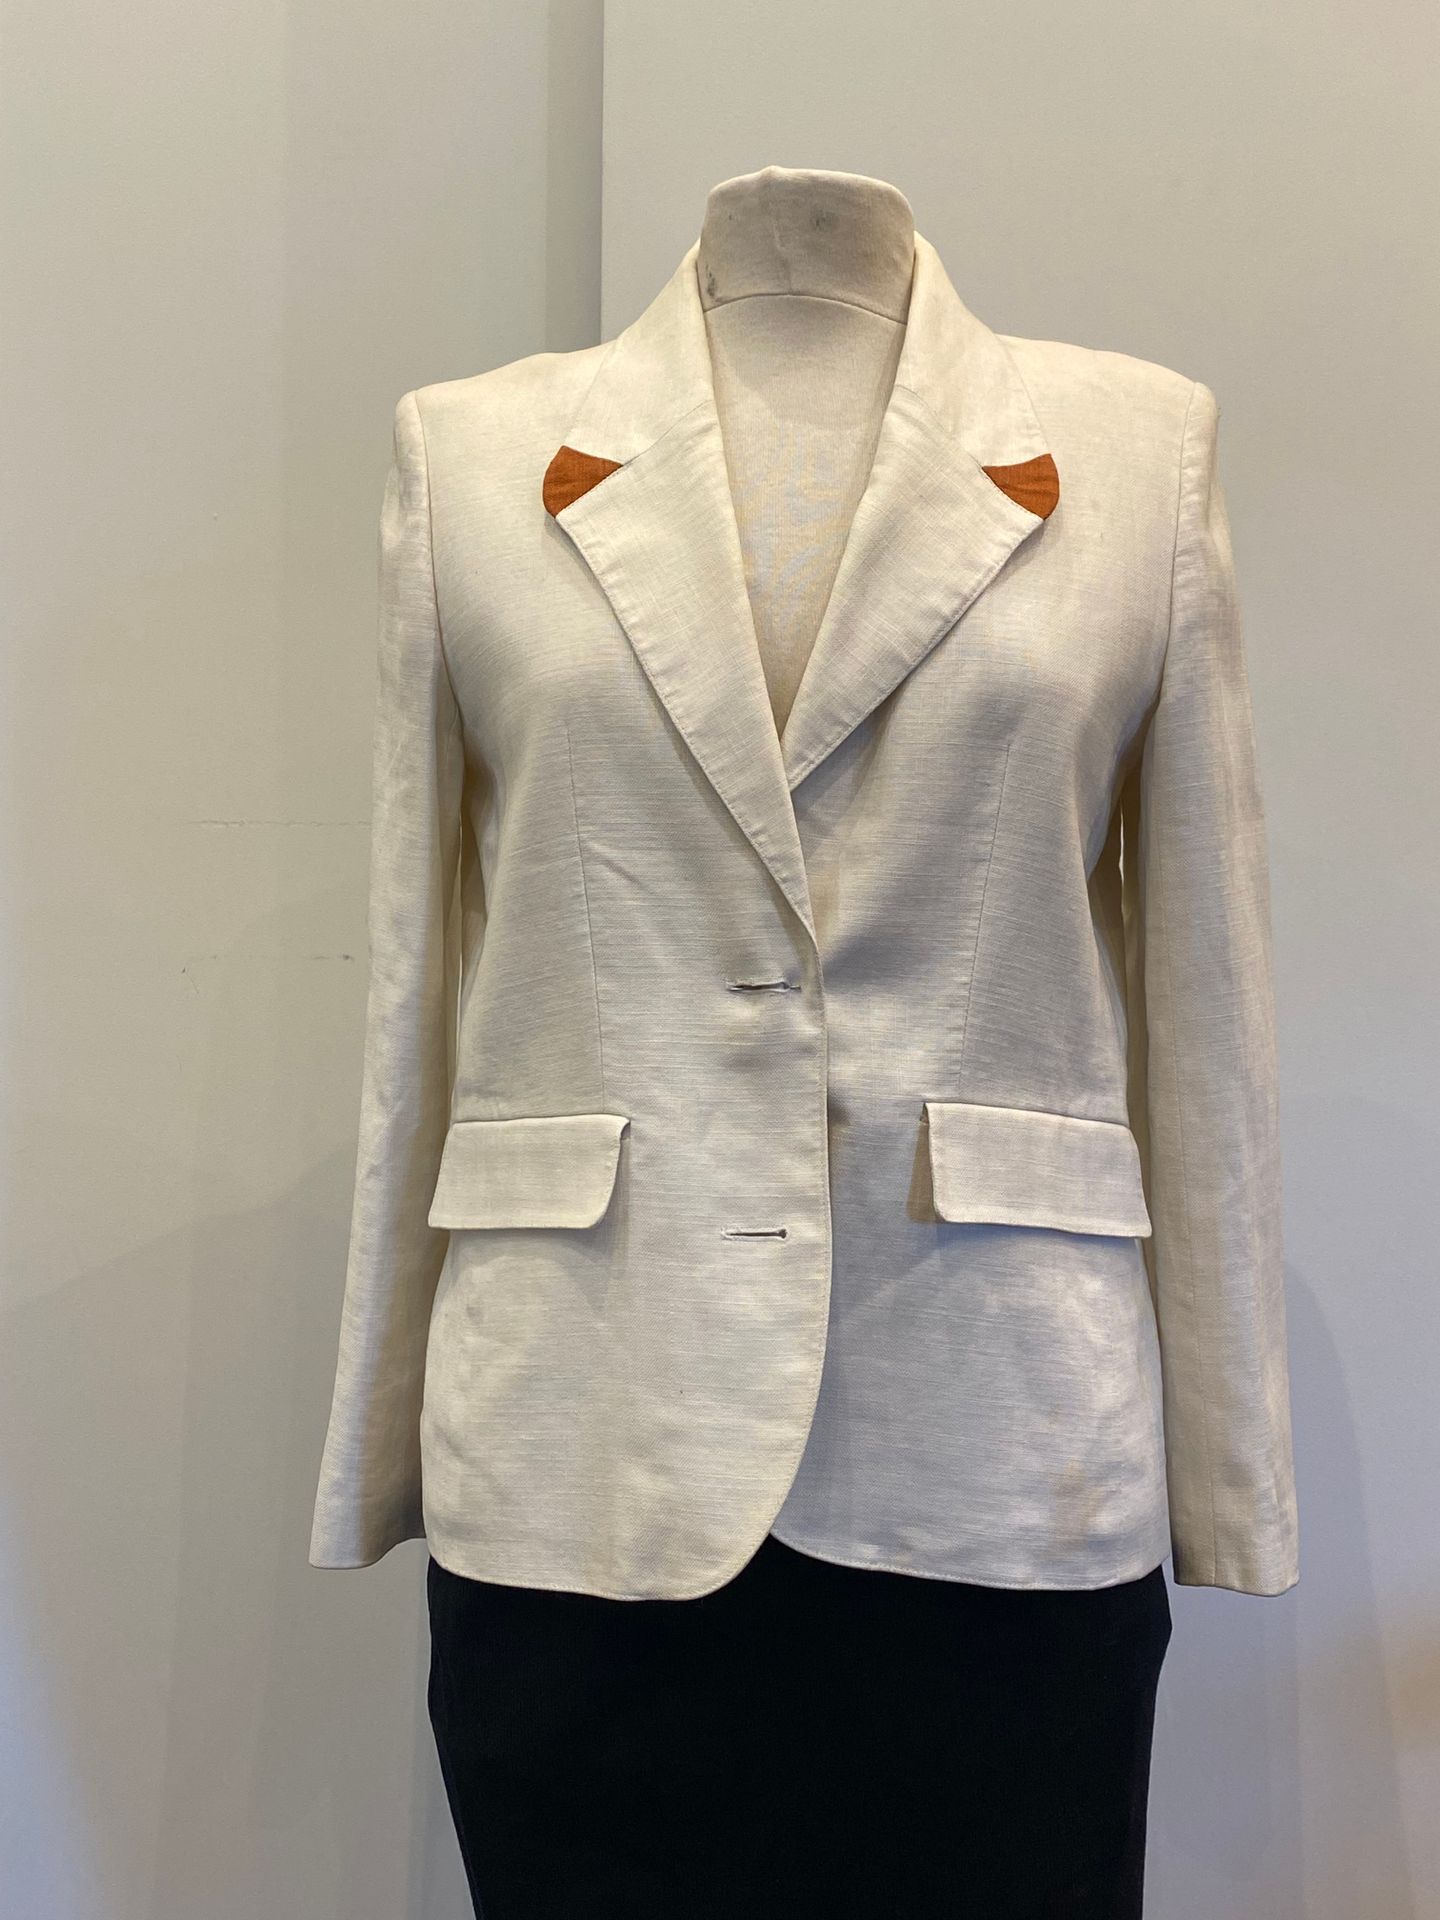 Null HERMES, beige linen jacket size 44 (missing buttons)